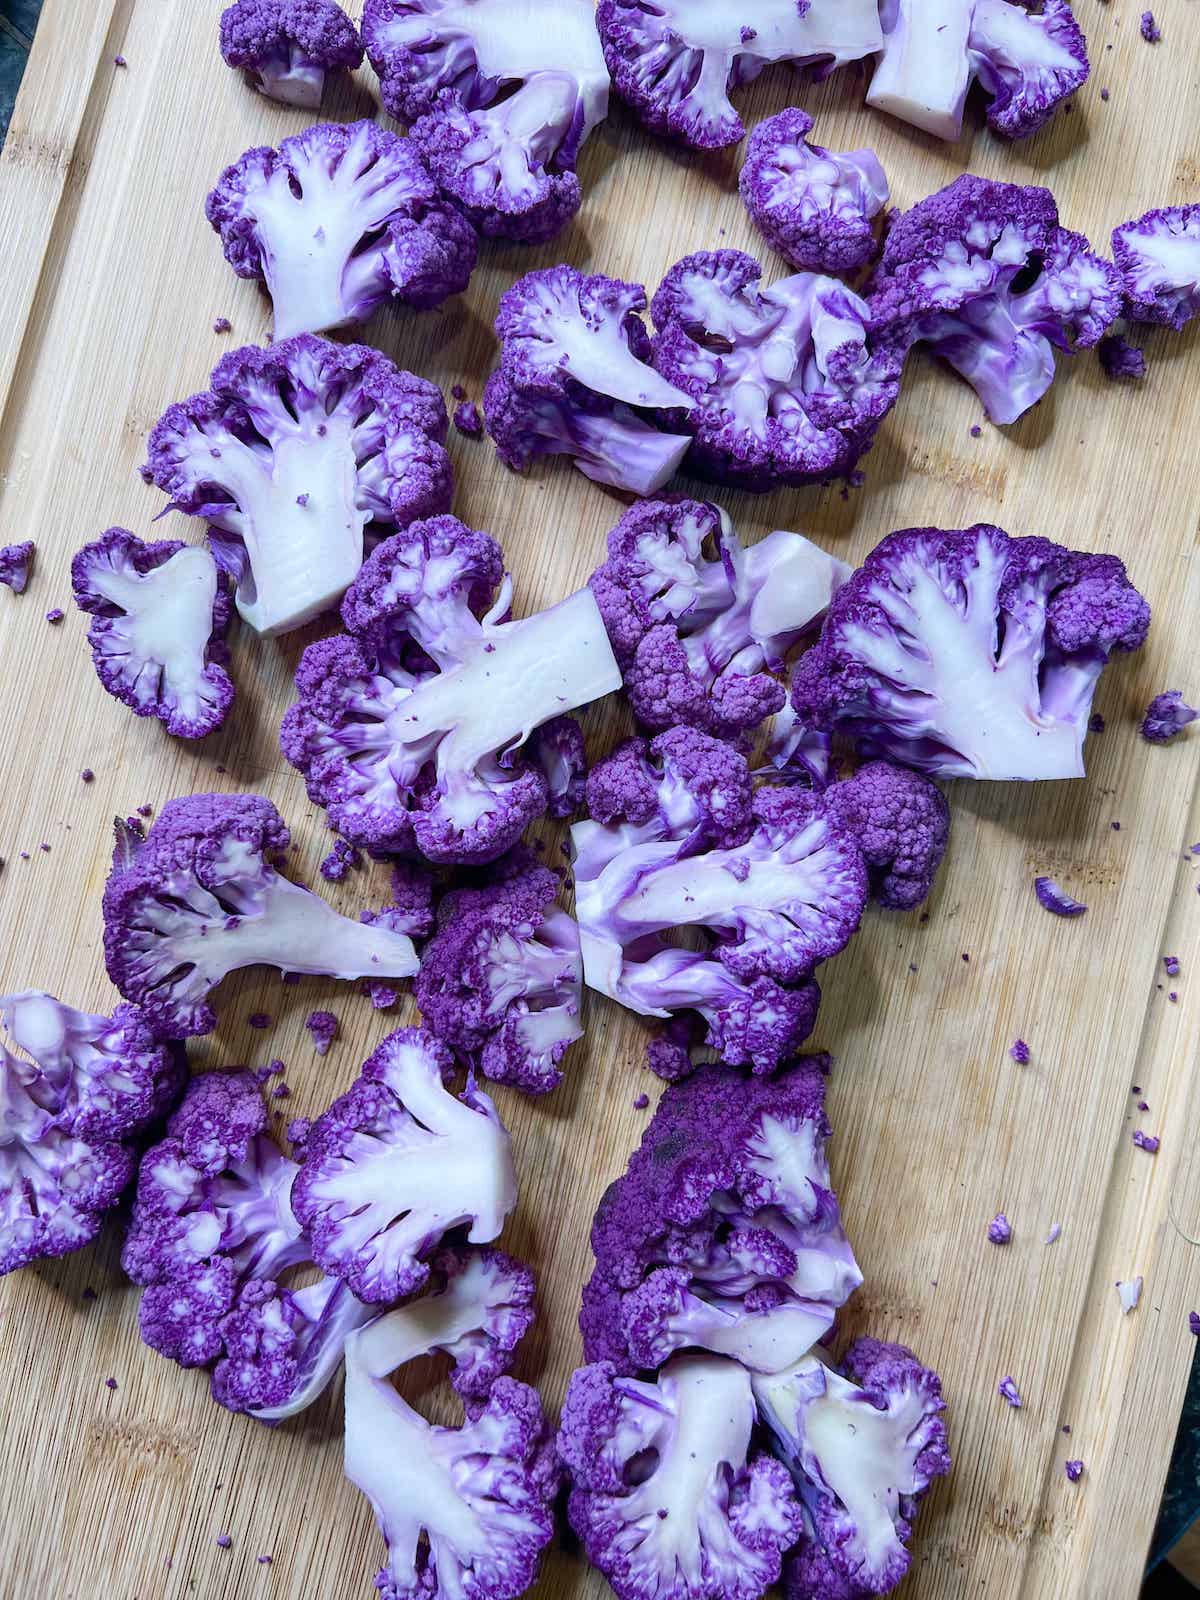 Slices of purple cauliflower florets on a wood cutting board.